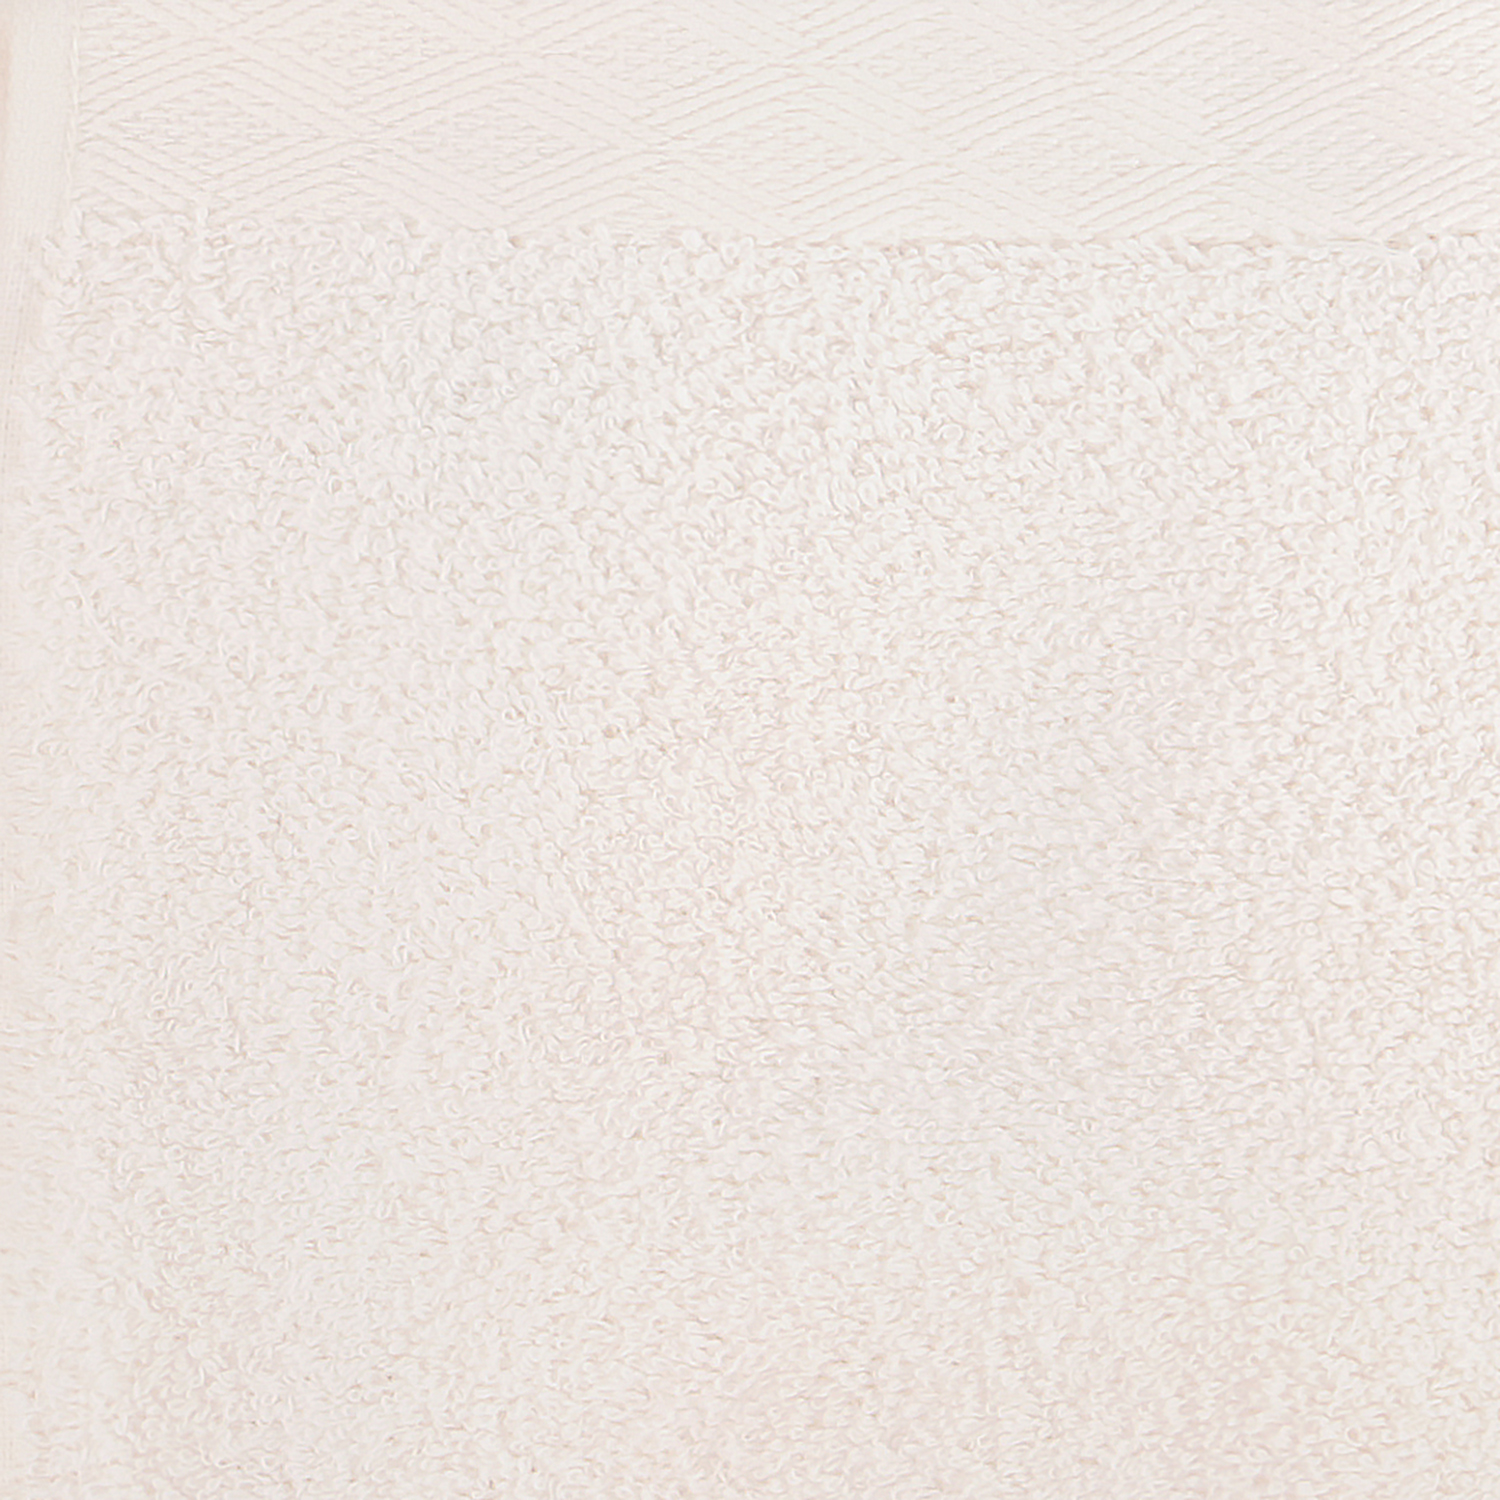 Полотенце для рук 50 x 100 см Lasa Home Softy белый Lasa Home CKH-190101SOFTY1670OFFWHITESERVIETTES50X100 - фото 2